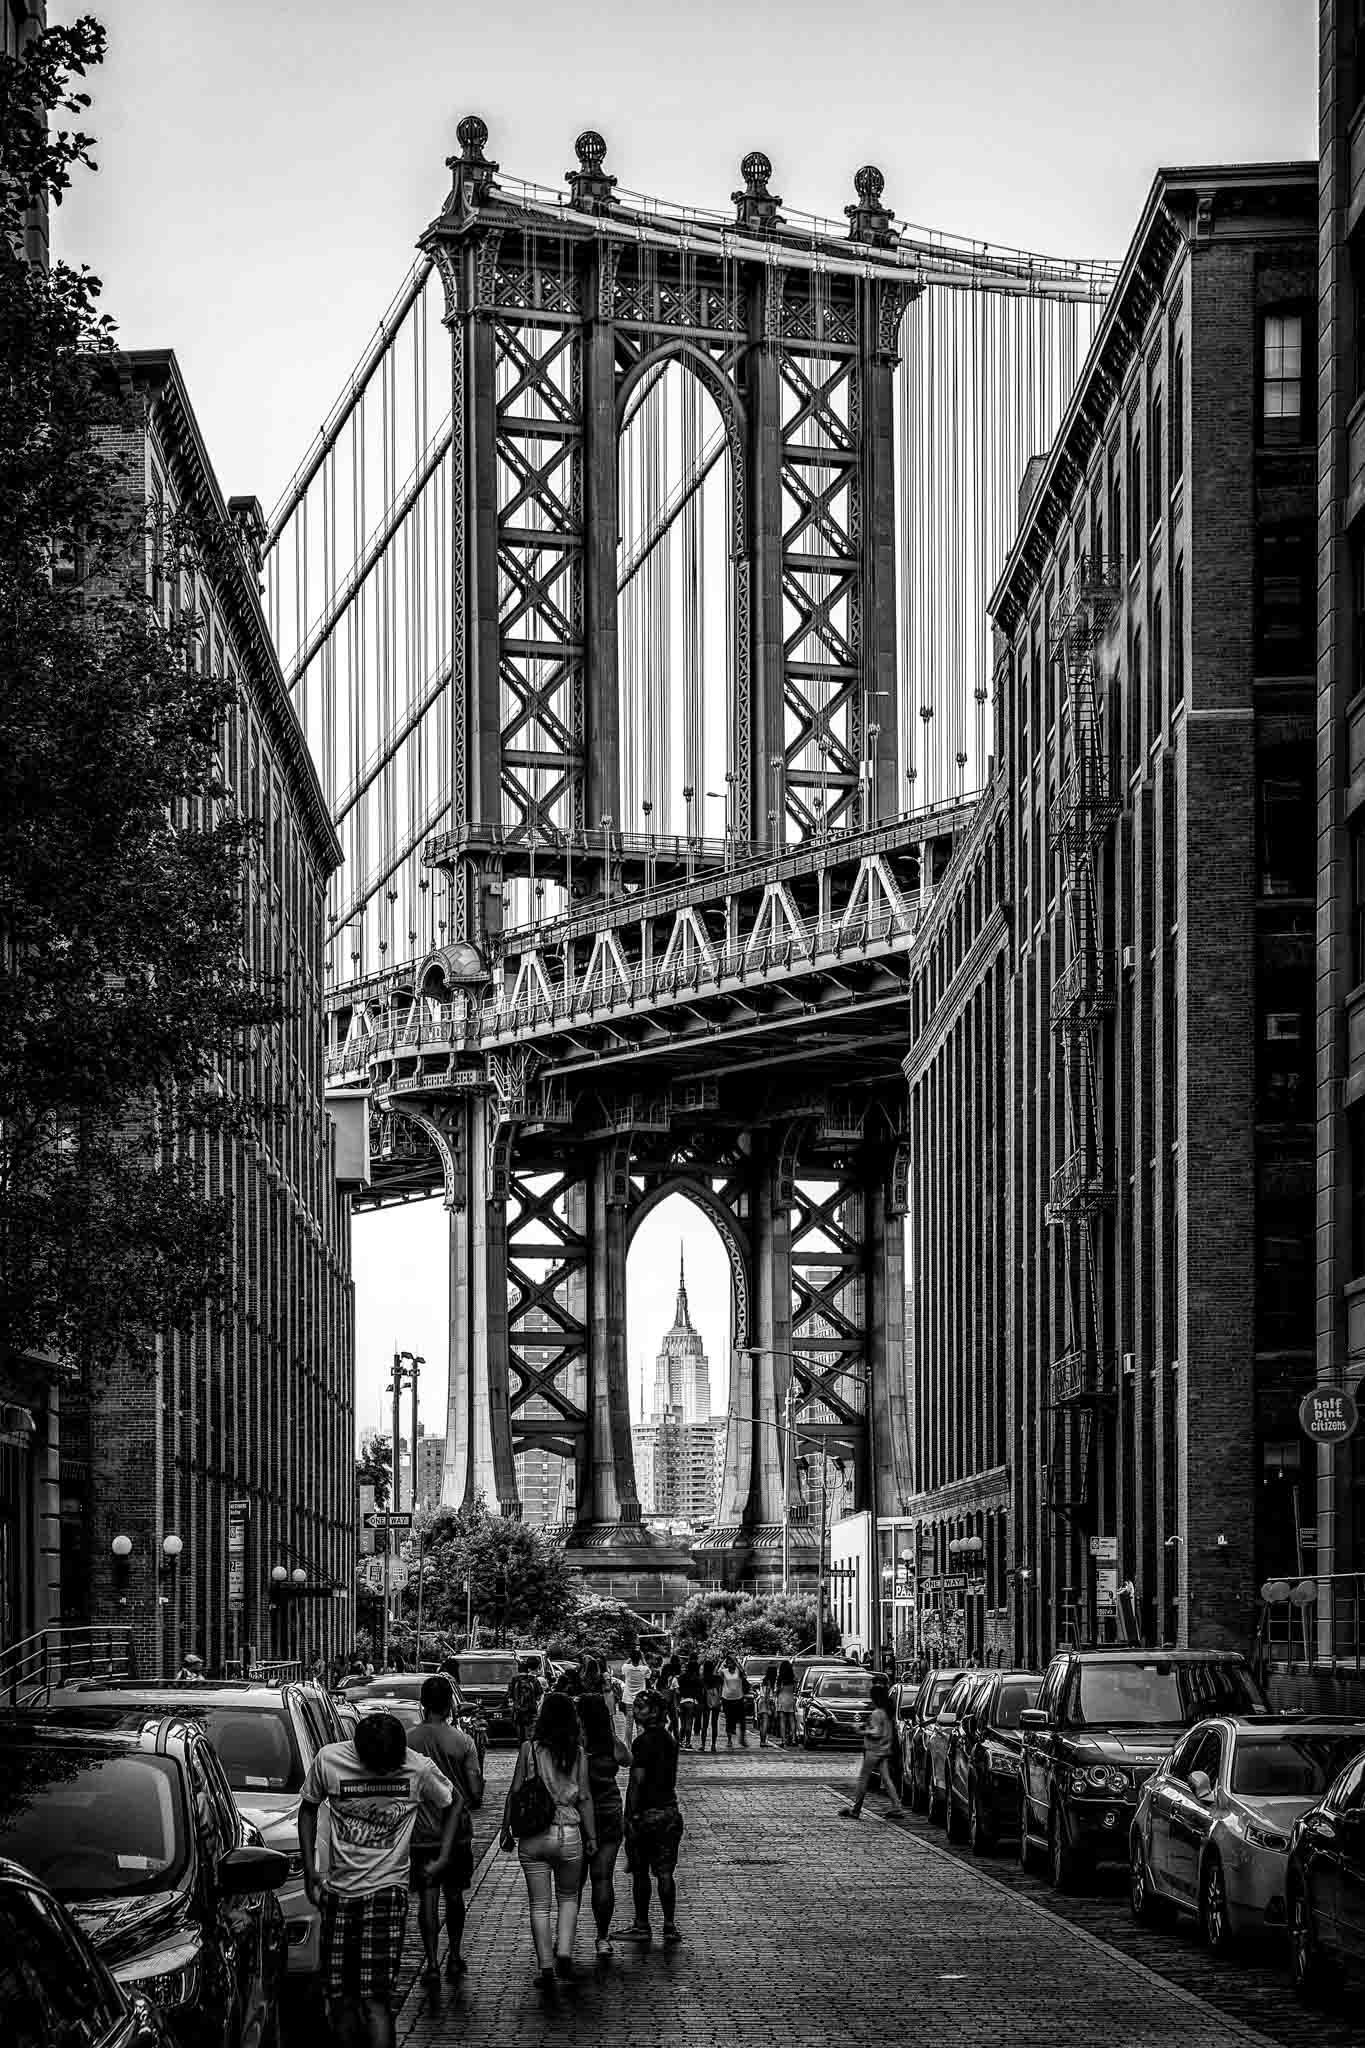 Manhattan Bridge with people walking on the street